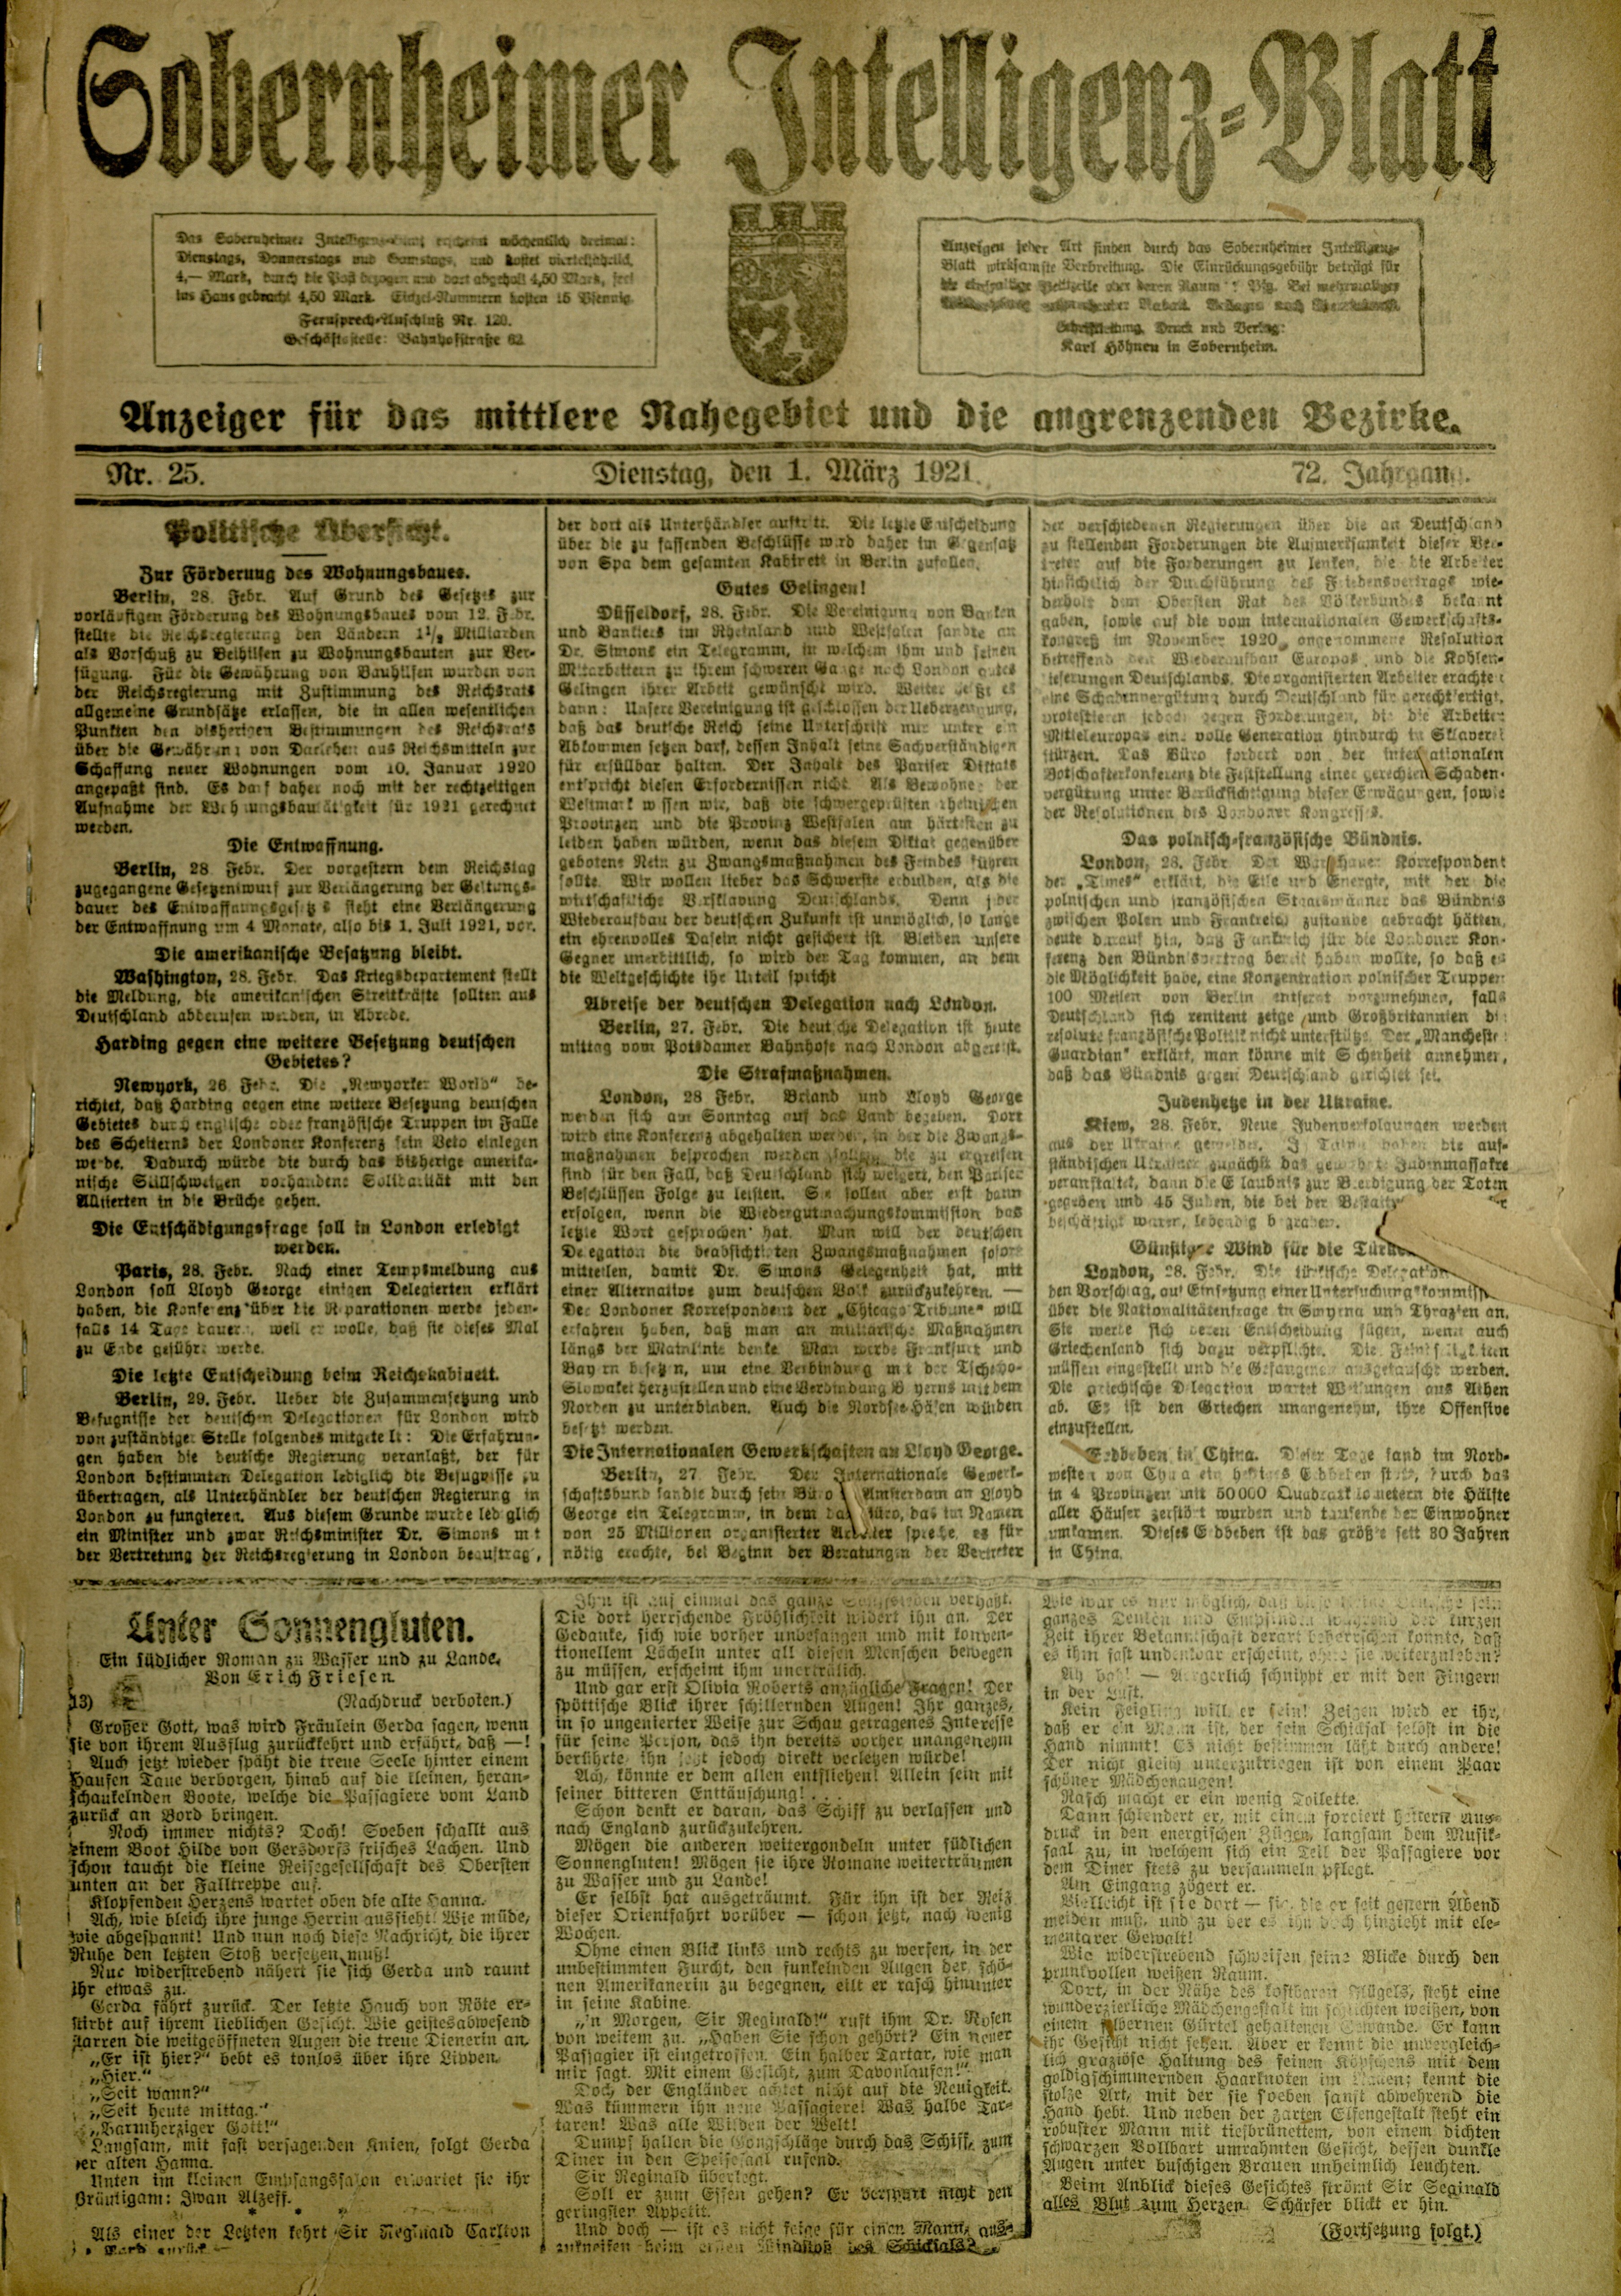 Zeitung: Sobernheimer Intelligenzblatt; März 1921, Jg. 72 Nr. 25 (Heimatmuseum Bad Sobernheim CC BY-NC-SA)